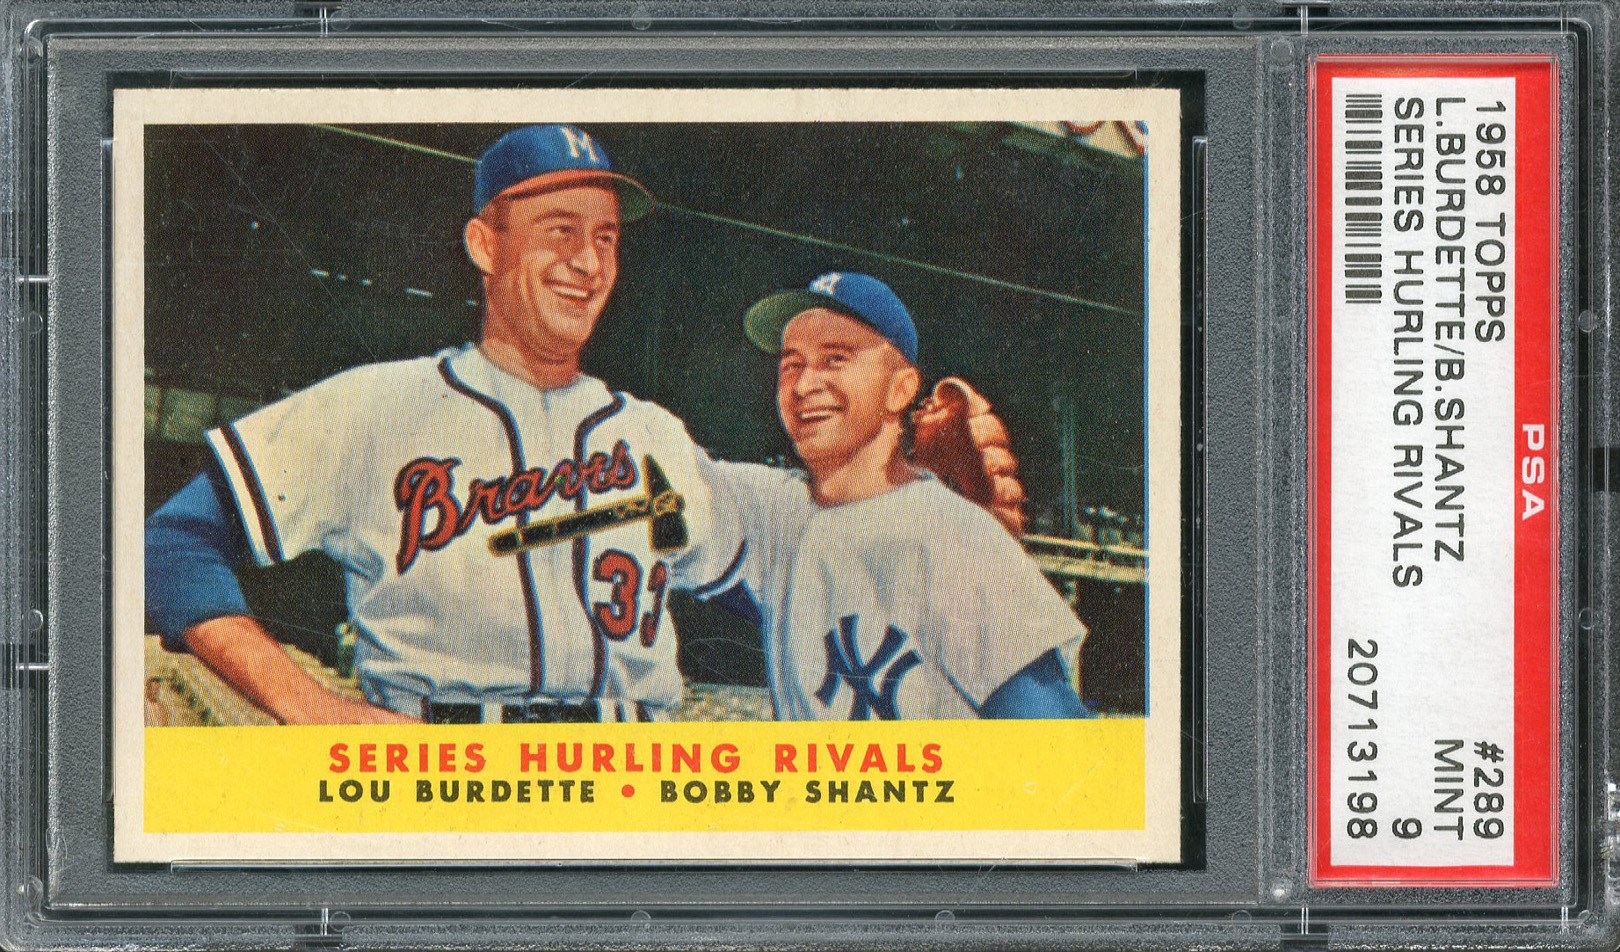 Baseball and Trading Cards - 1958 Topps #289 Series Hurling Rivals Burdette/Shantz PSA MINT 9